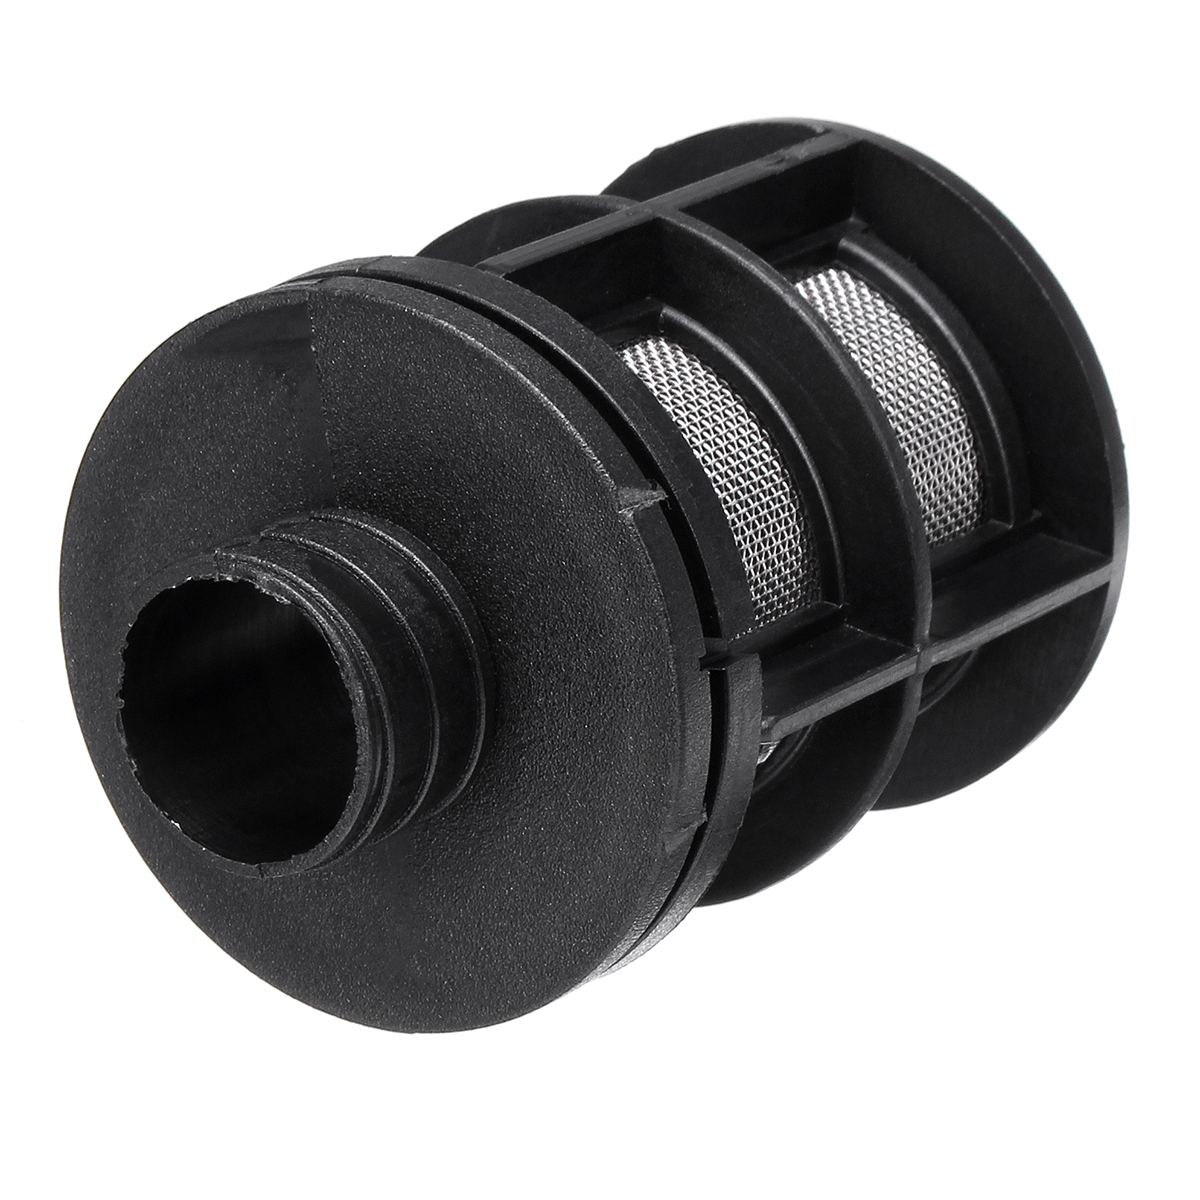 25mm-Air-Intake-Filter-Silencer-For-Dometic-Eberspacher-Webasto-Diesel-Heater-1409798-8